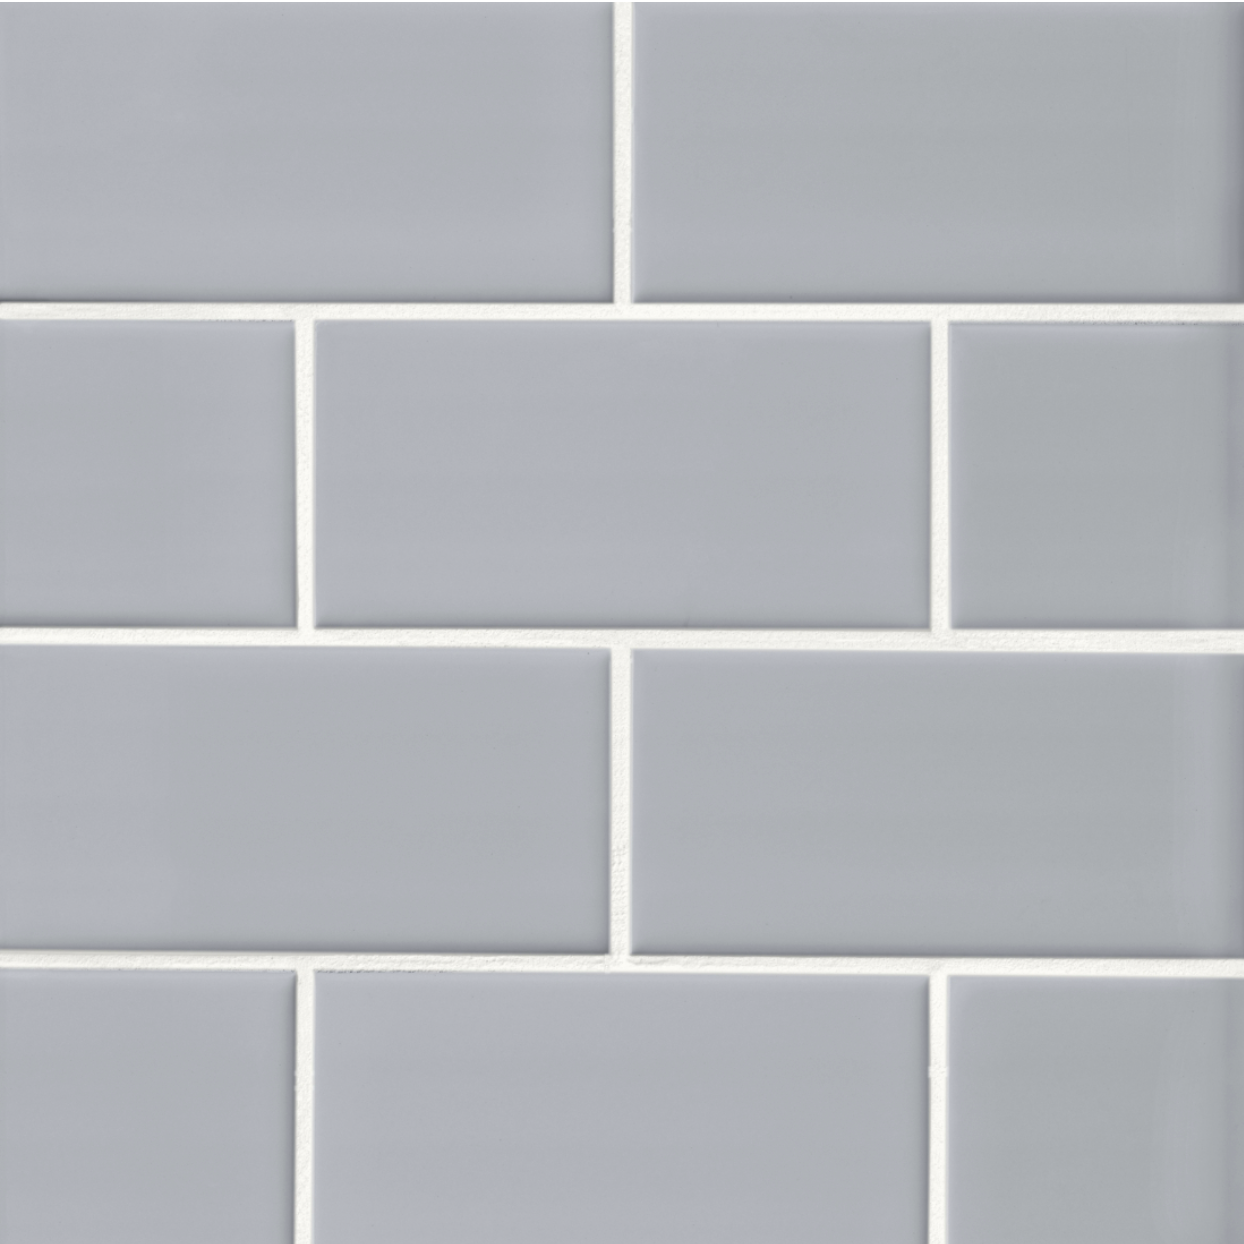 Shower wall tile 3x6 denim the tile shop